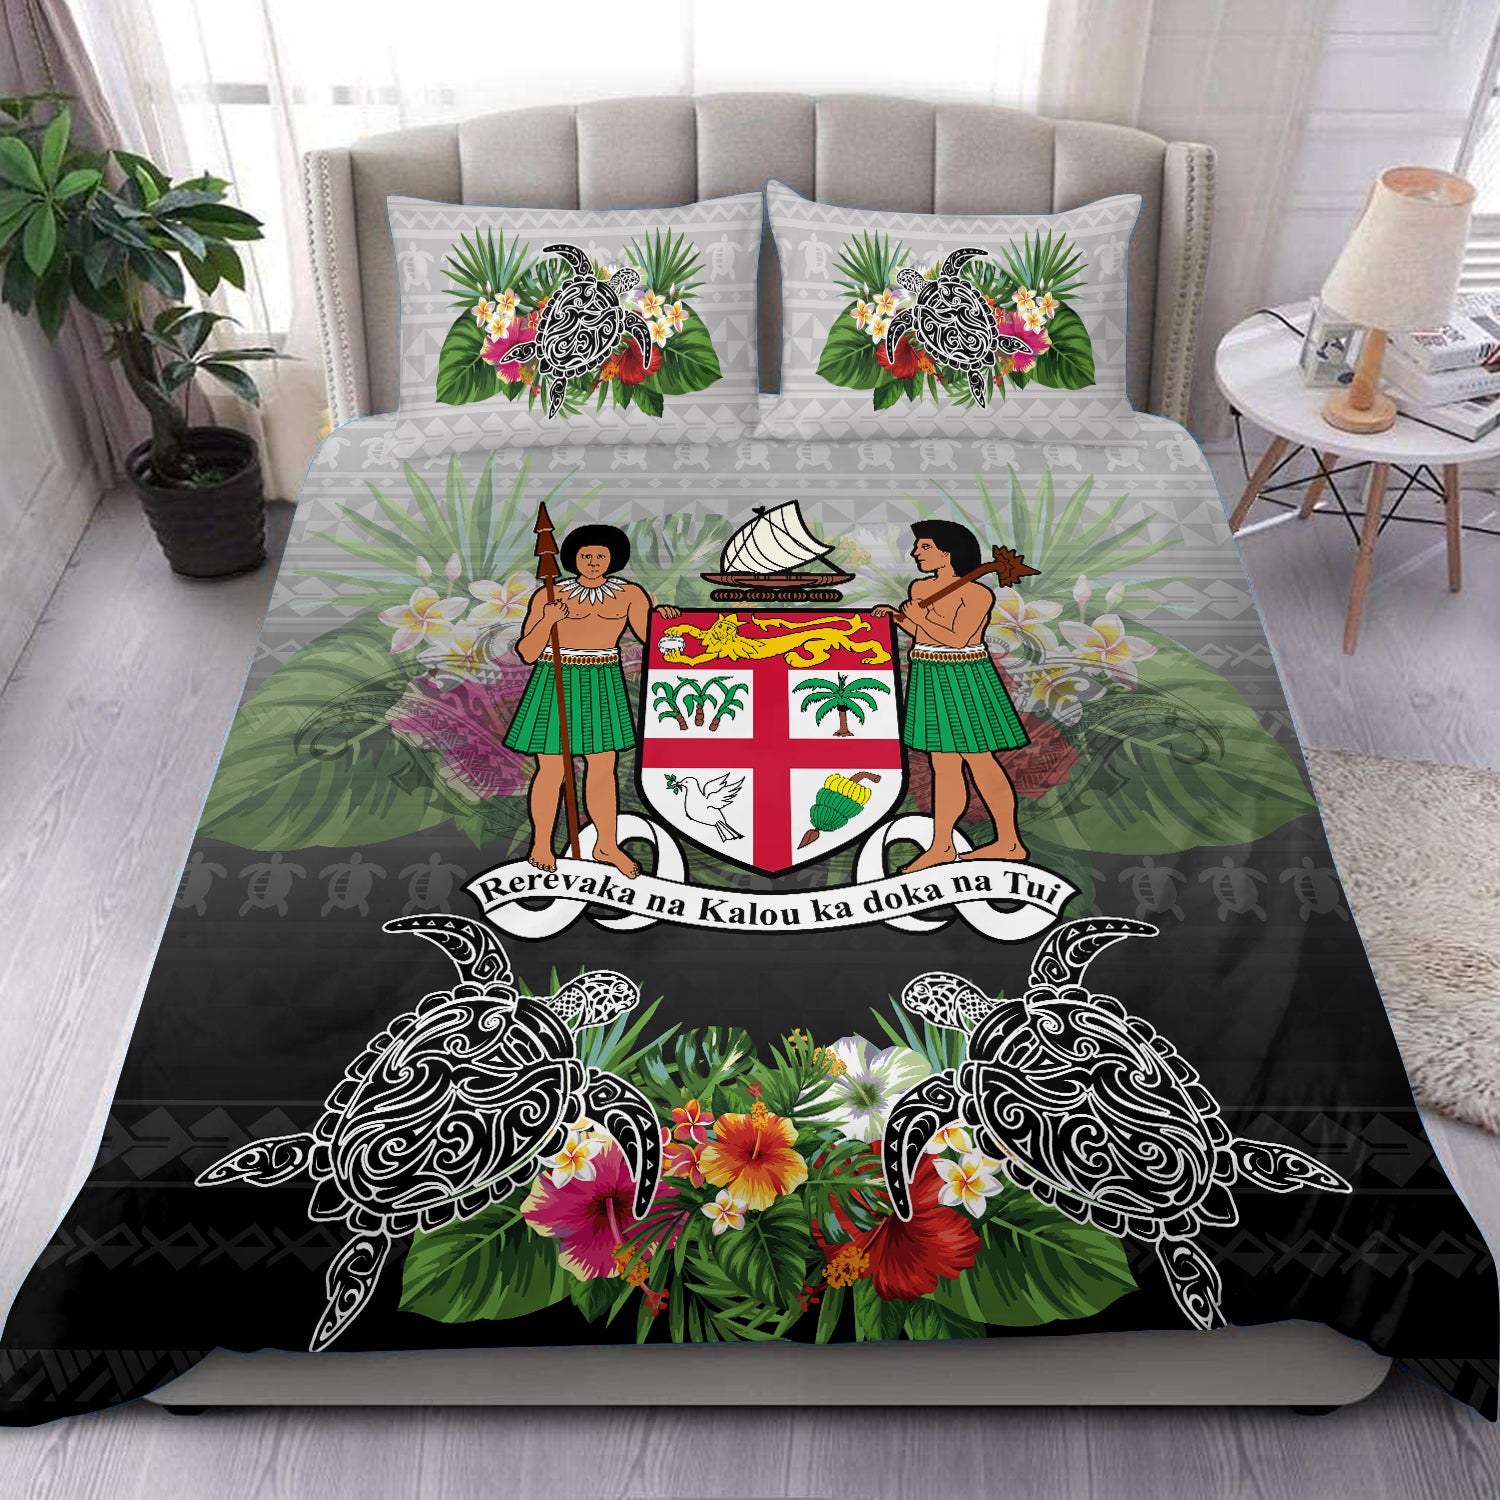 Fiji Bedding Sets - Fijian patterns ver1 Black - LT20 Blue - Polynesian Pride